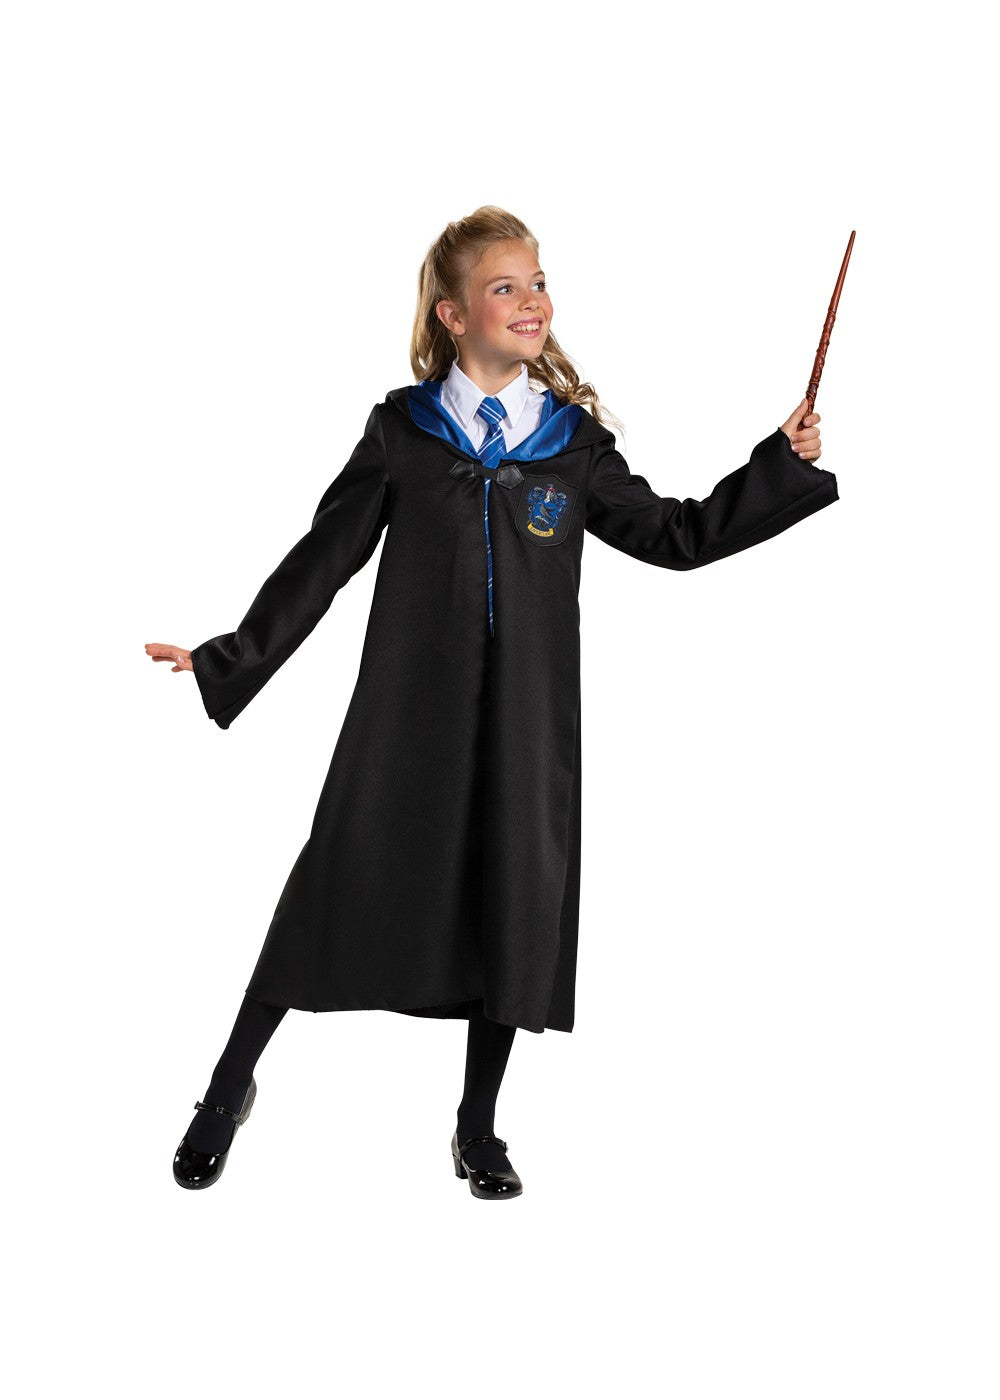 Harry Potter - Ravenclaw Children's Costume